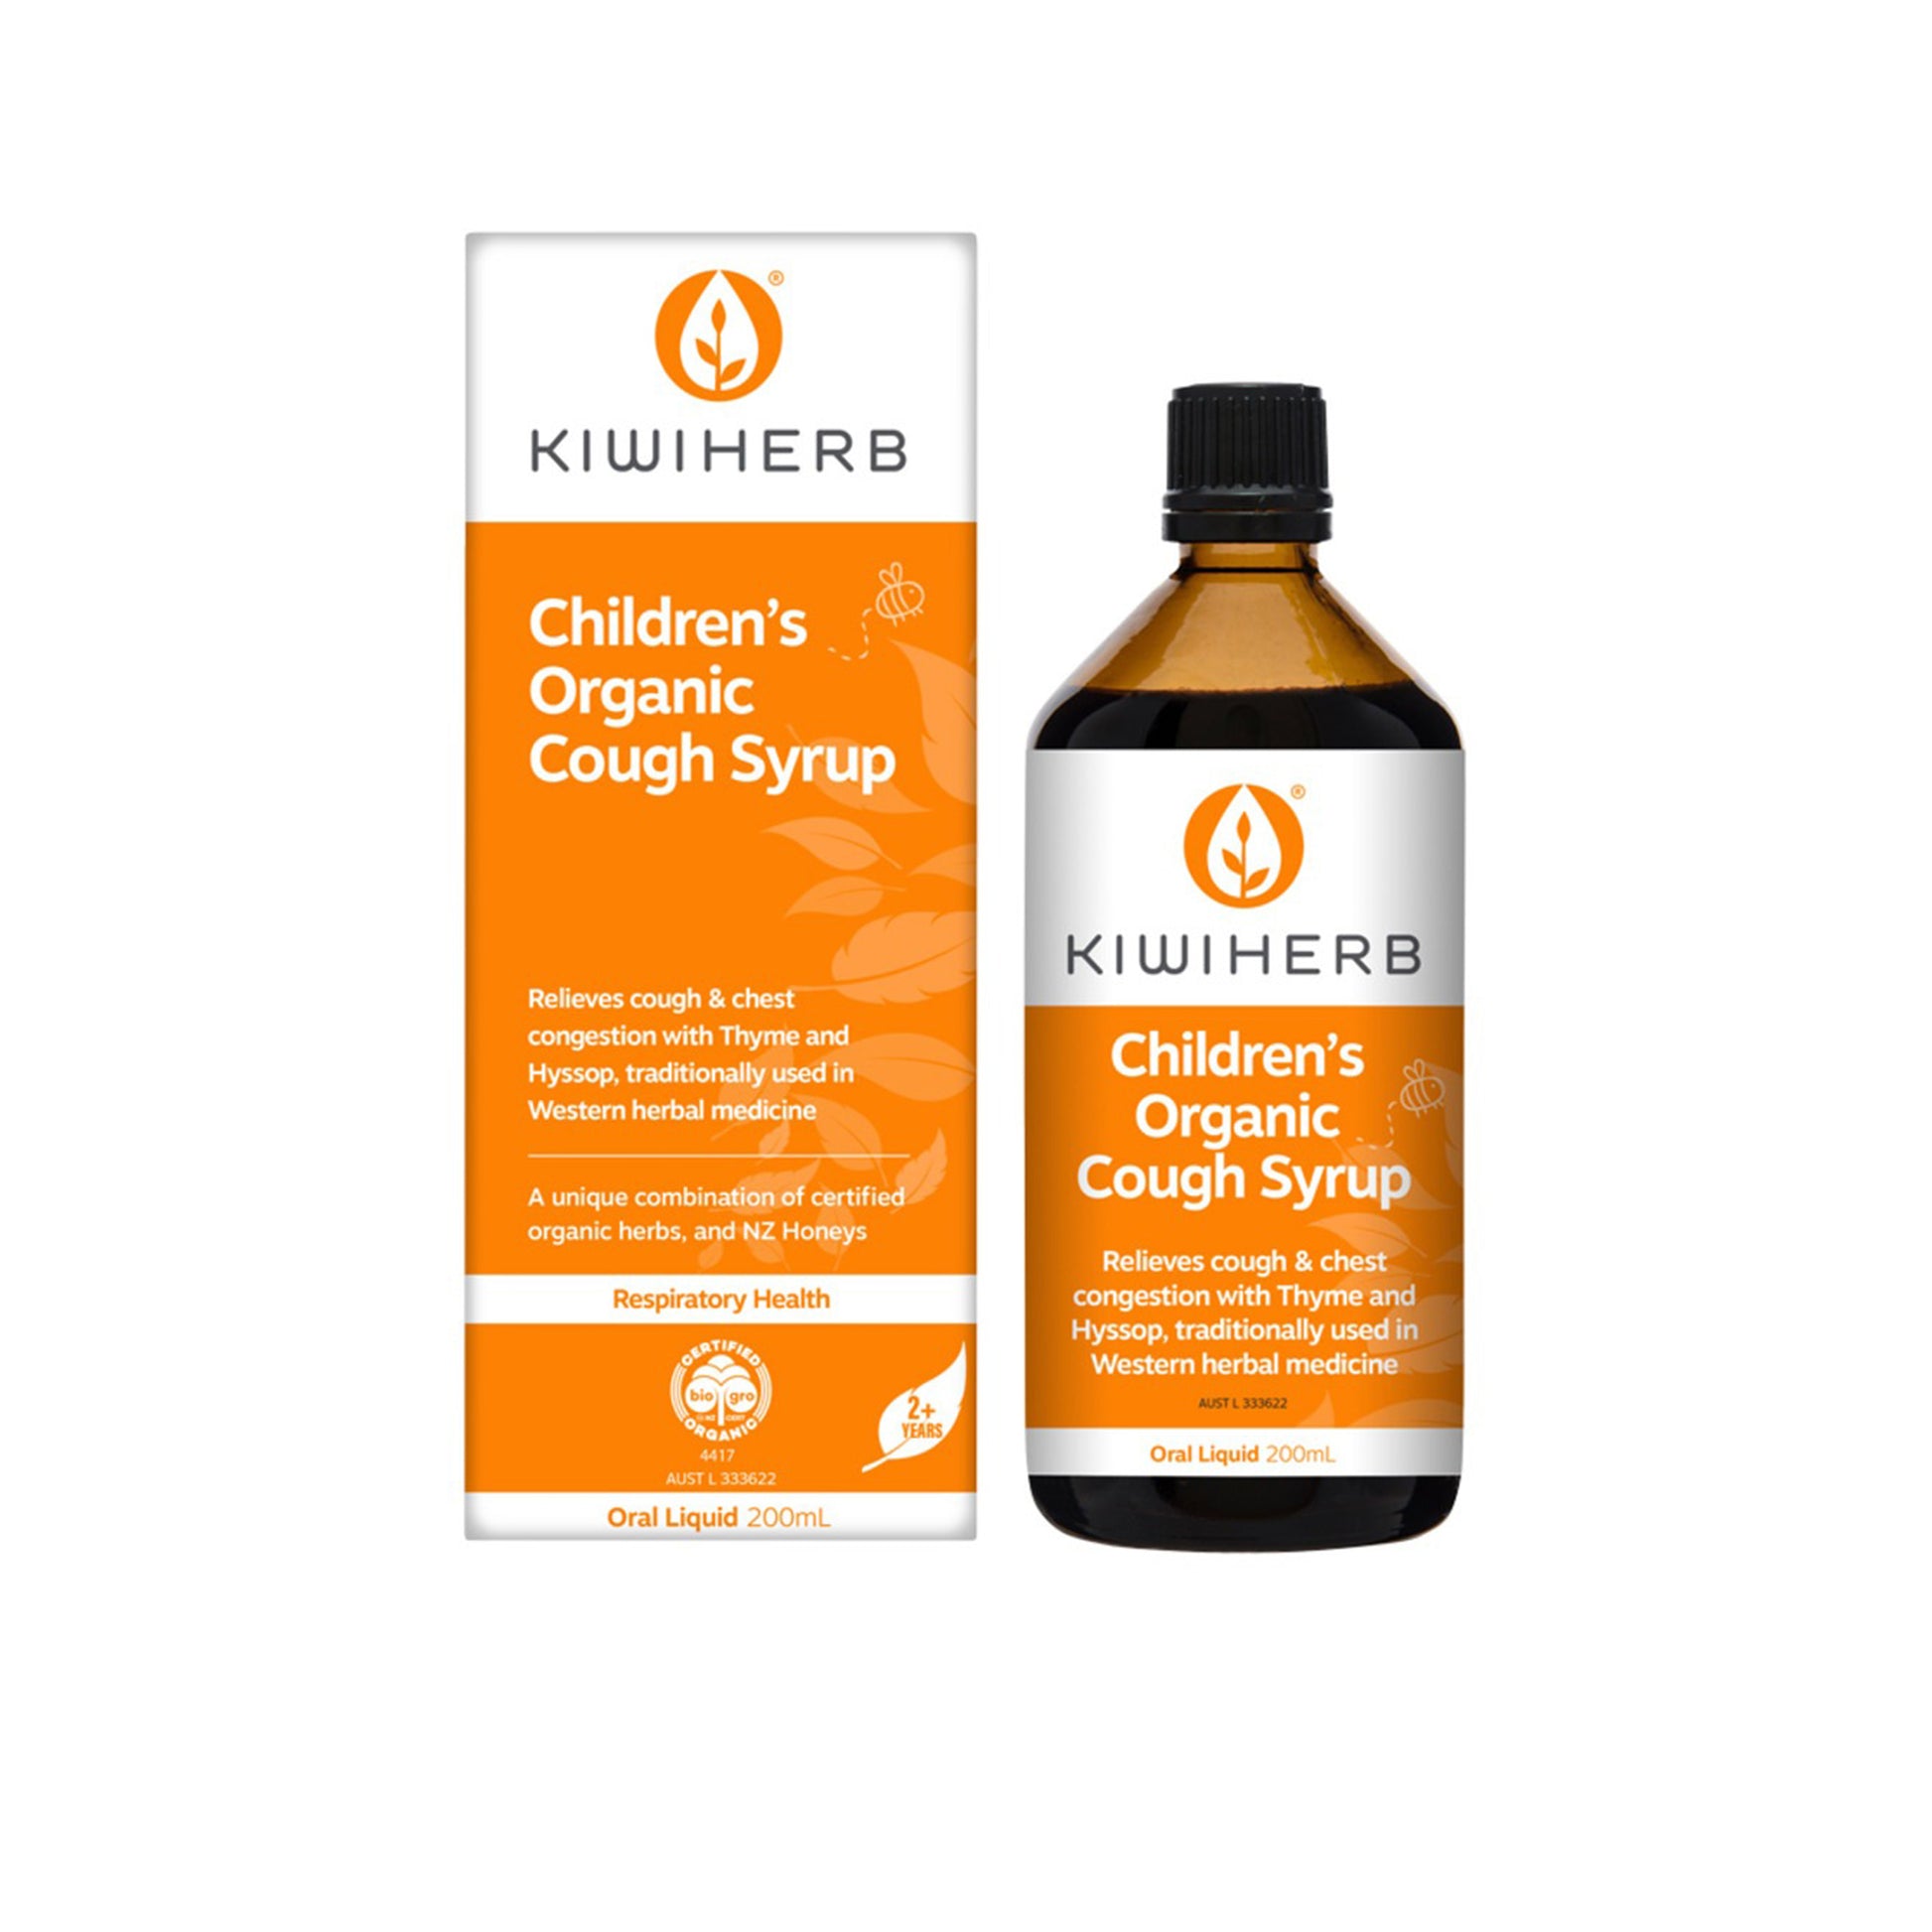 Children's Organic Cough Syrup 200ml with Box - KiwiHerb | MLC Space